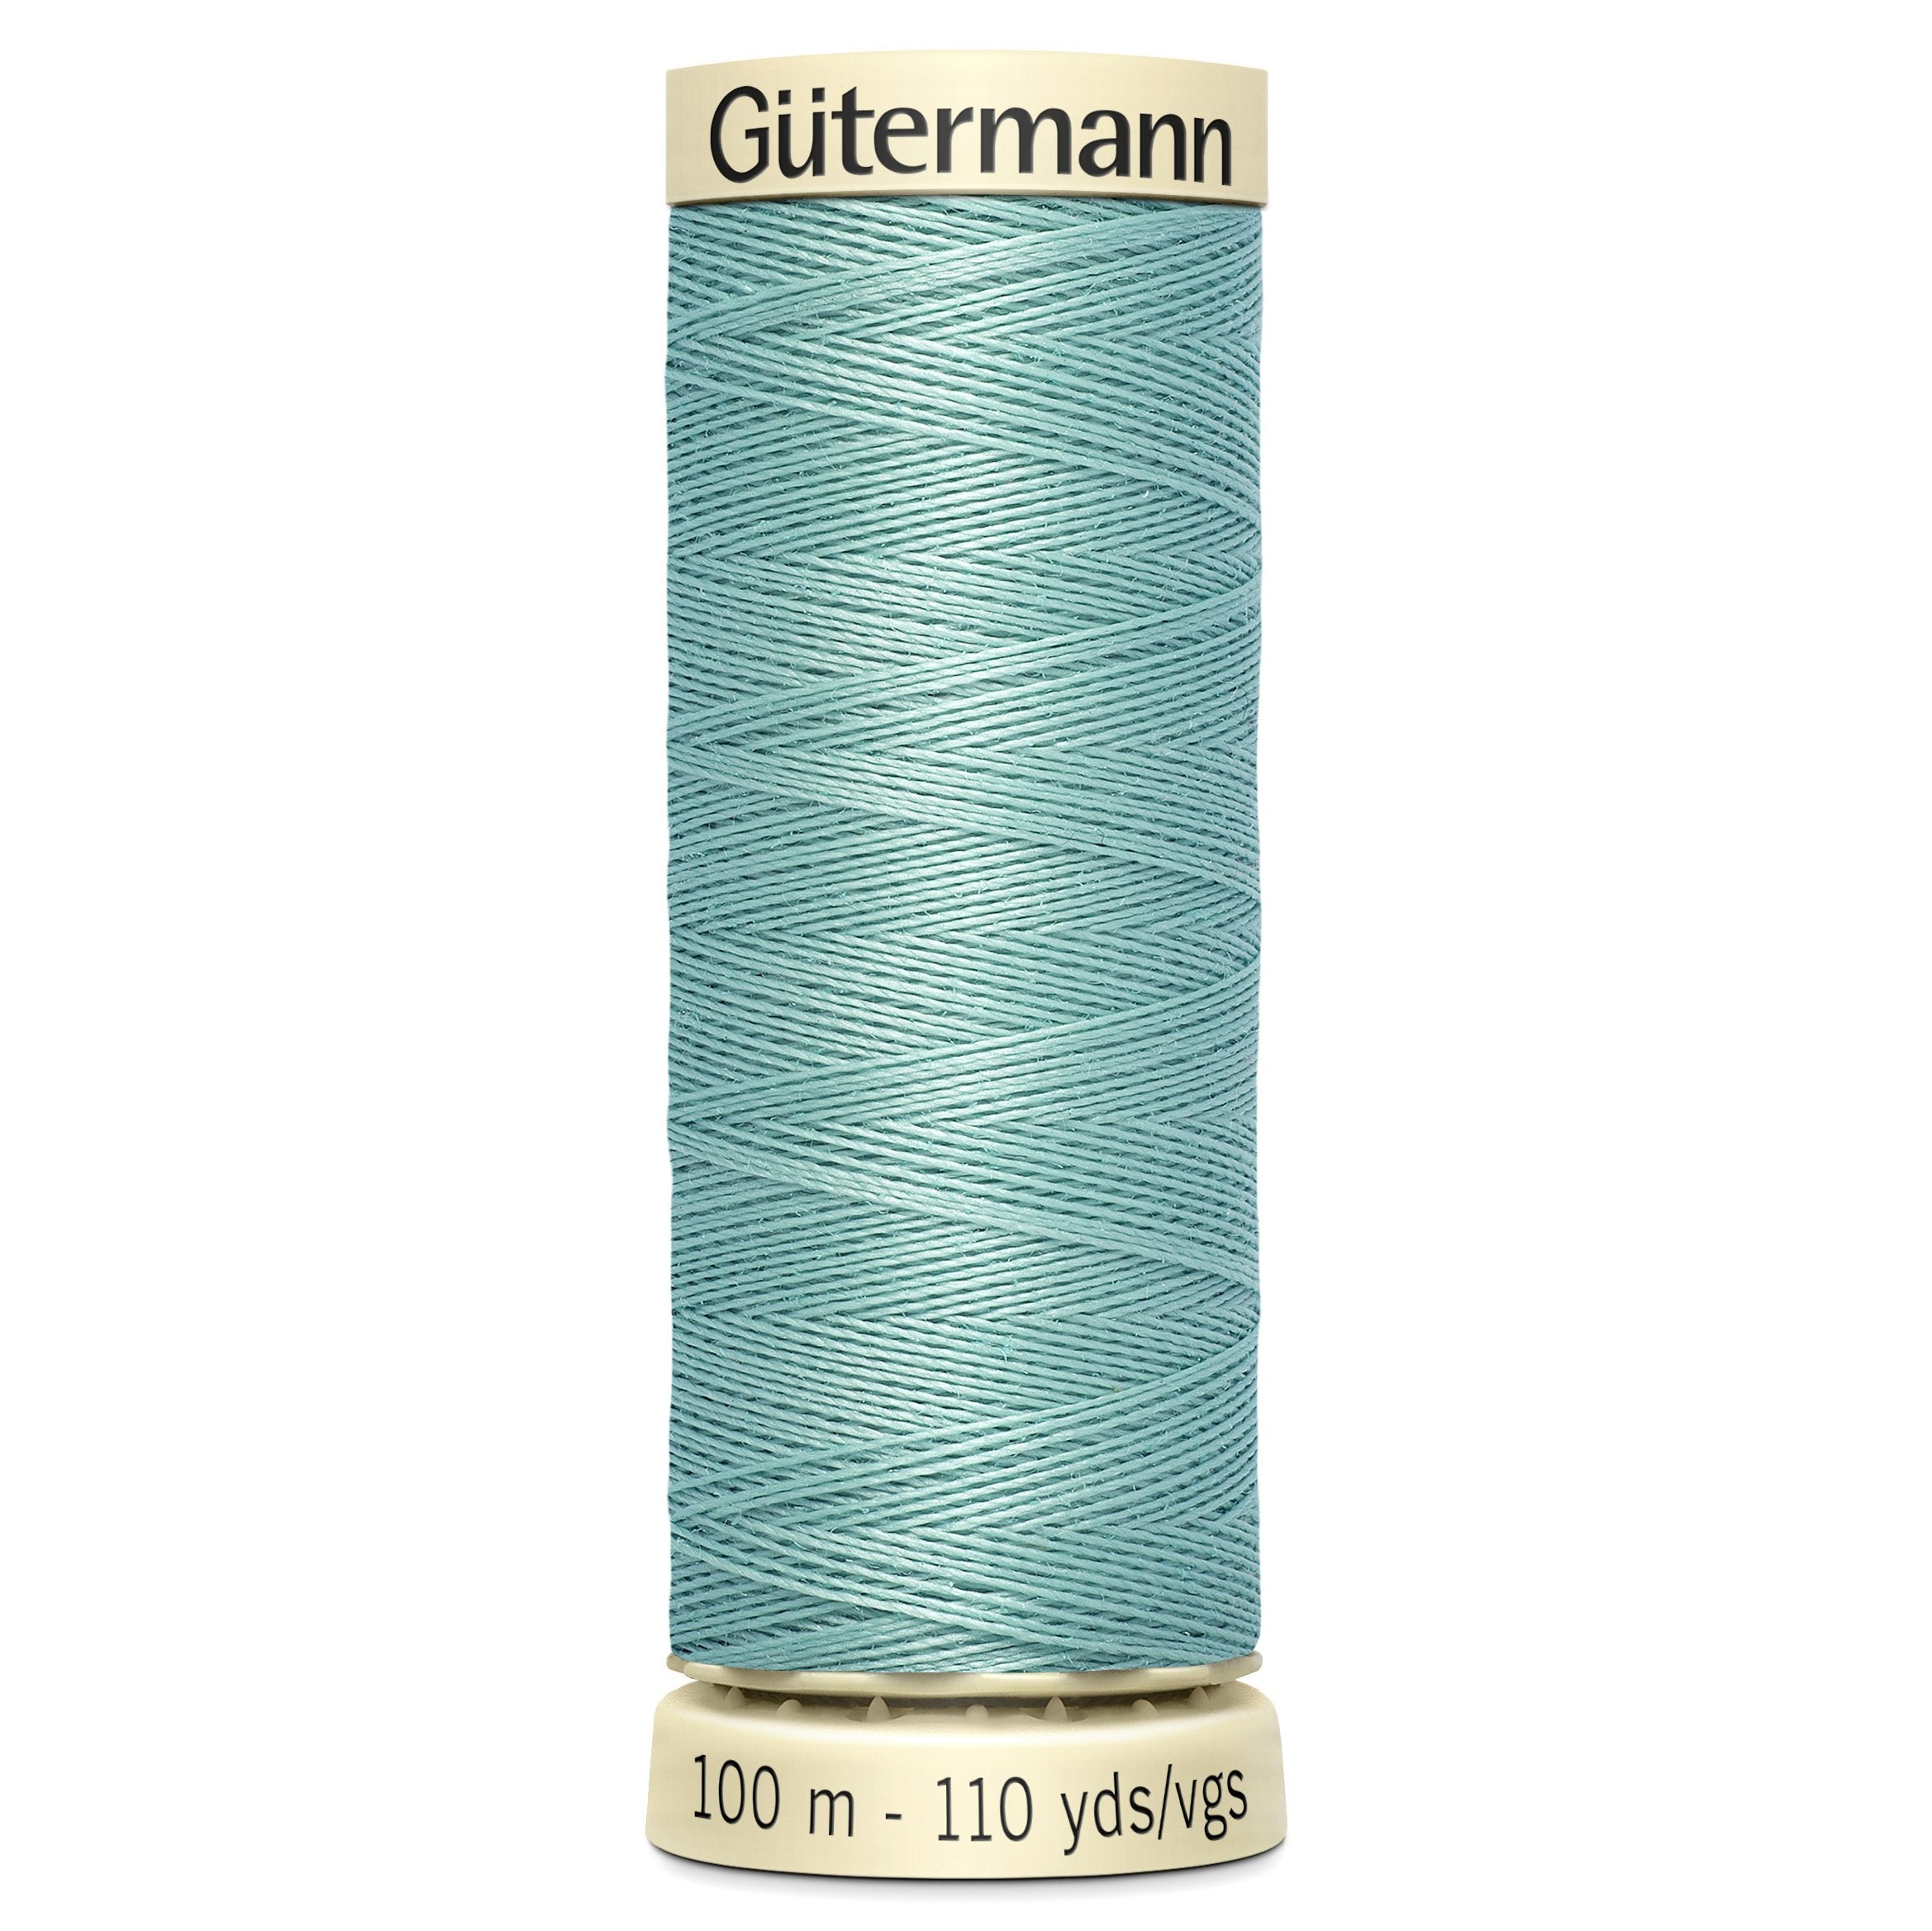 Gutermann Sew All Thread colour 929 Light Aqua from Jaycotts Sewing Supplies